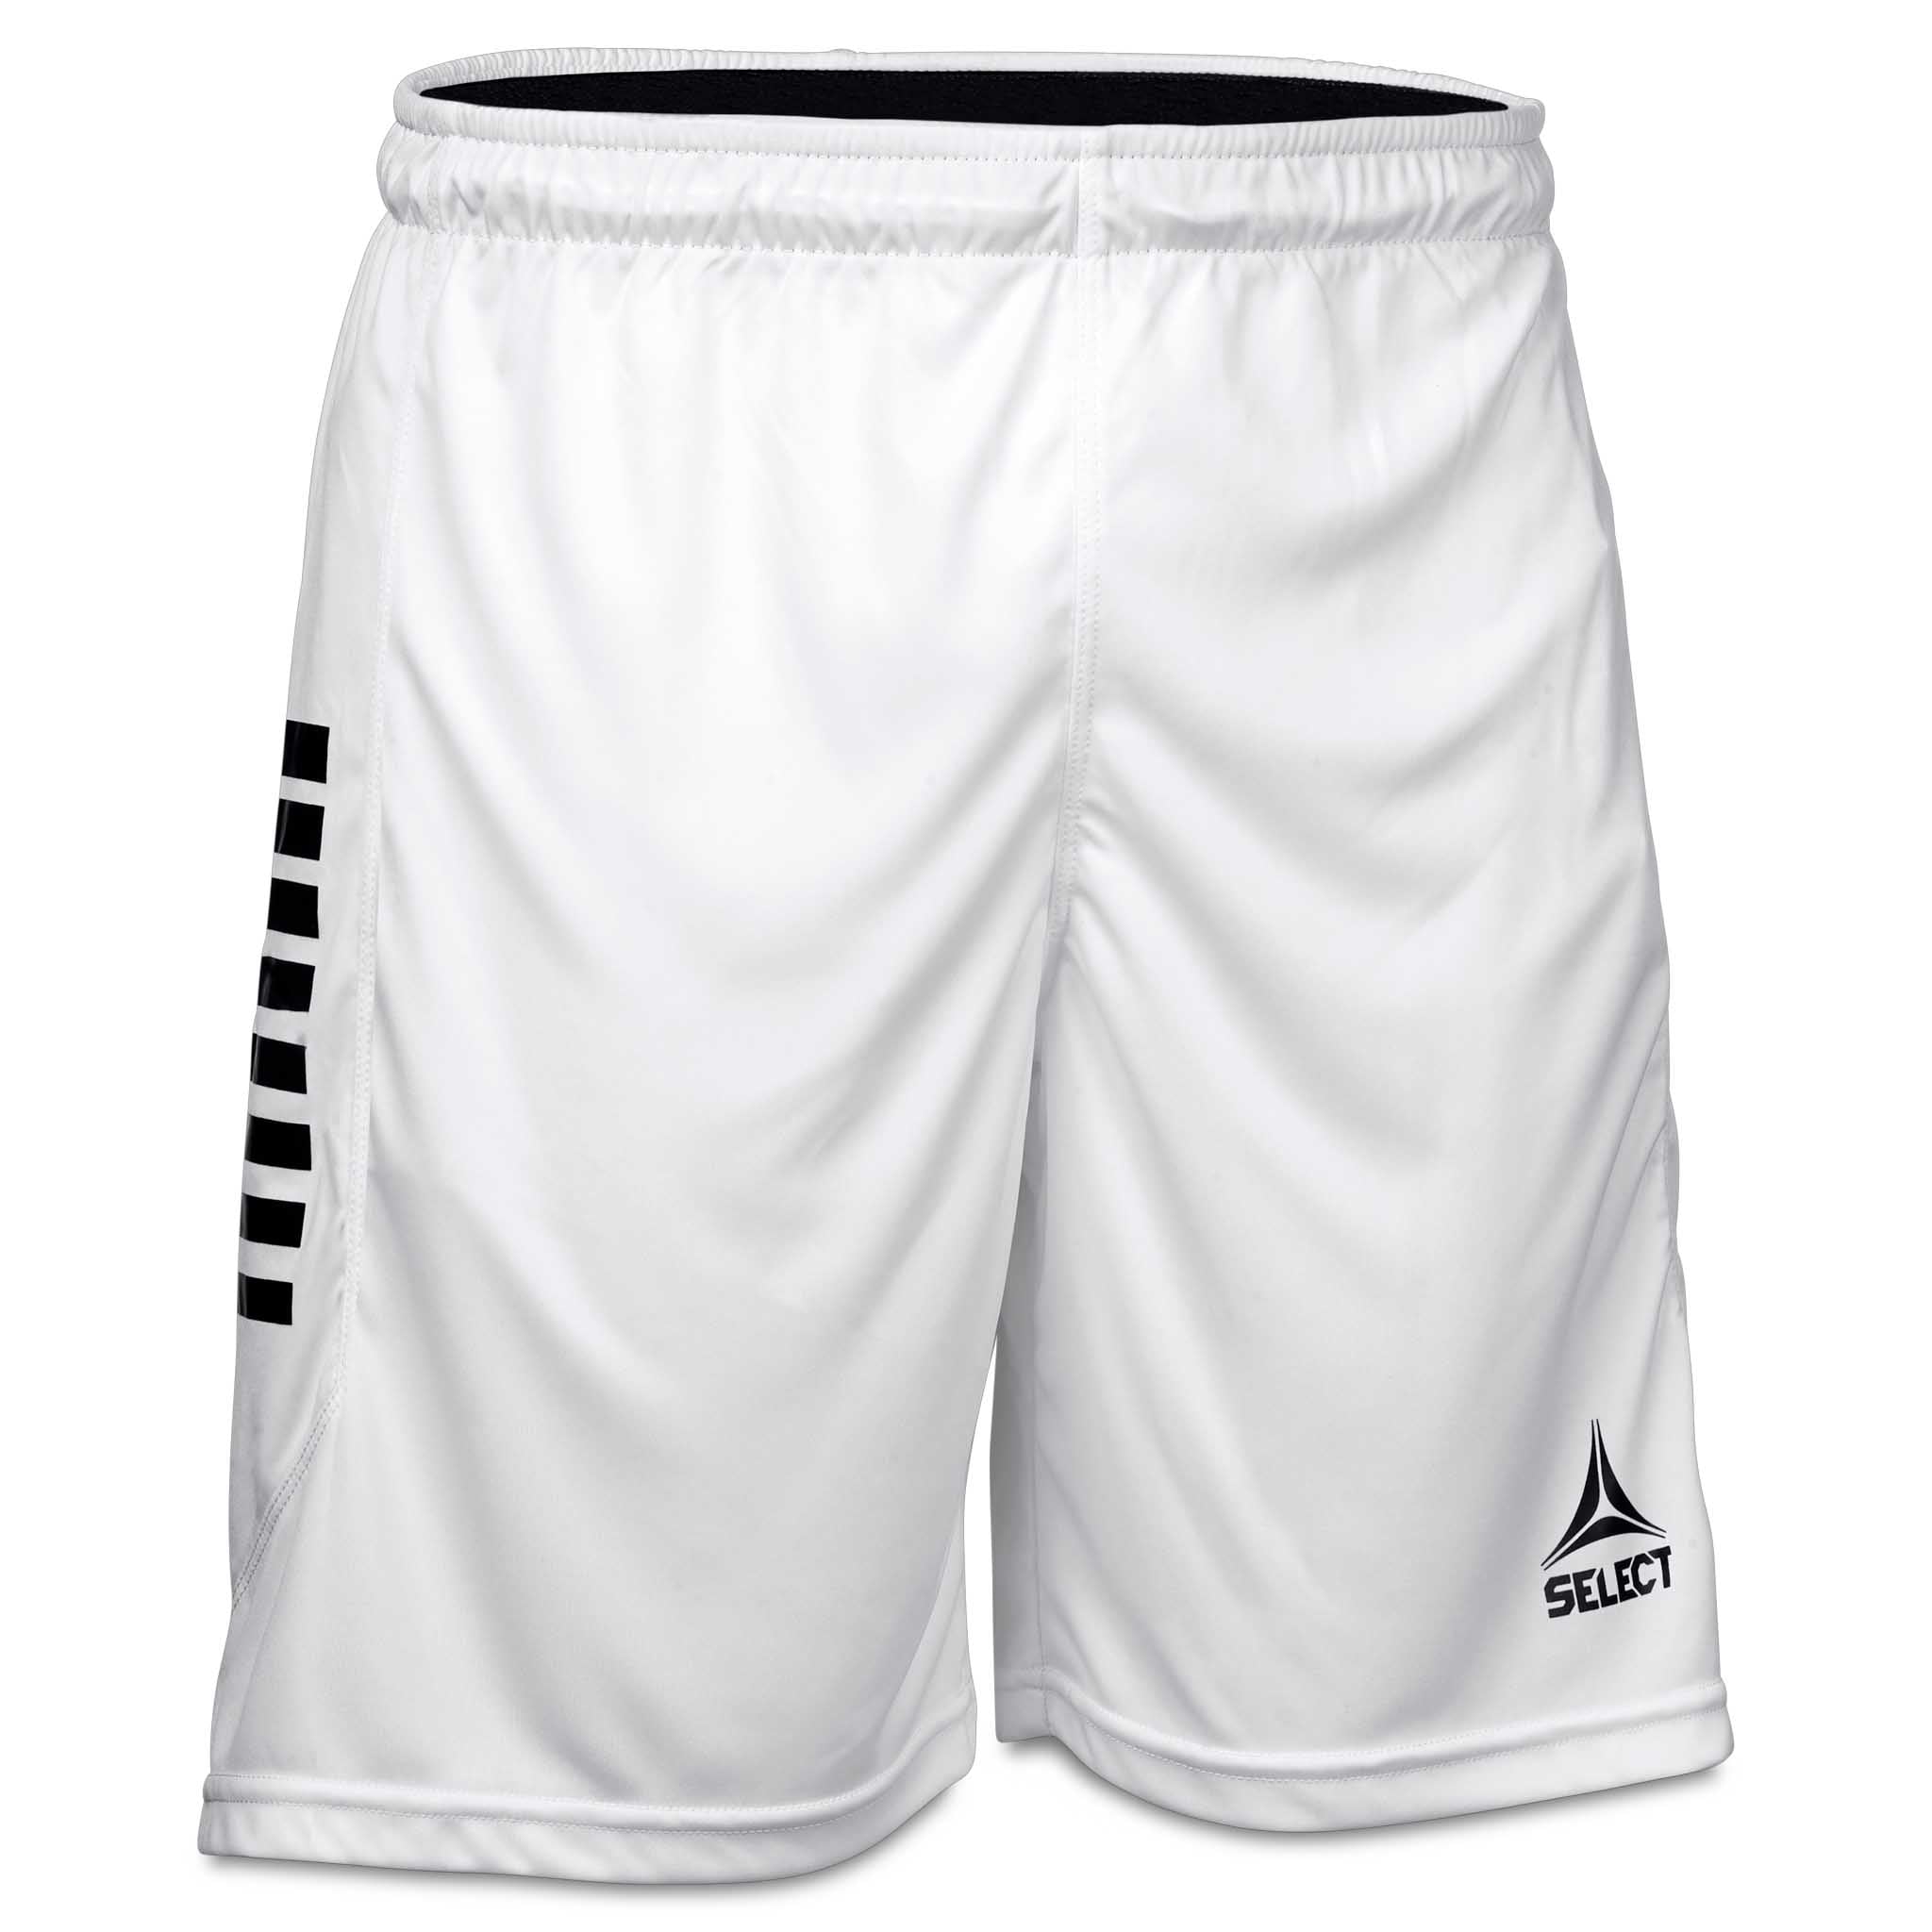 Monaco shorts - Barn #färg_vit/svart